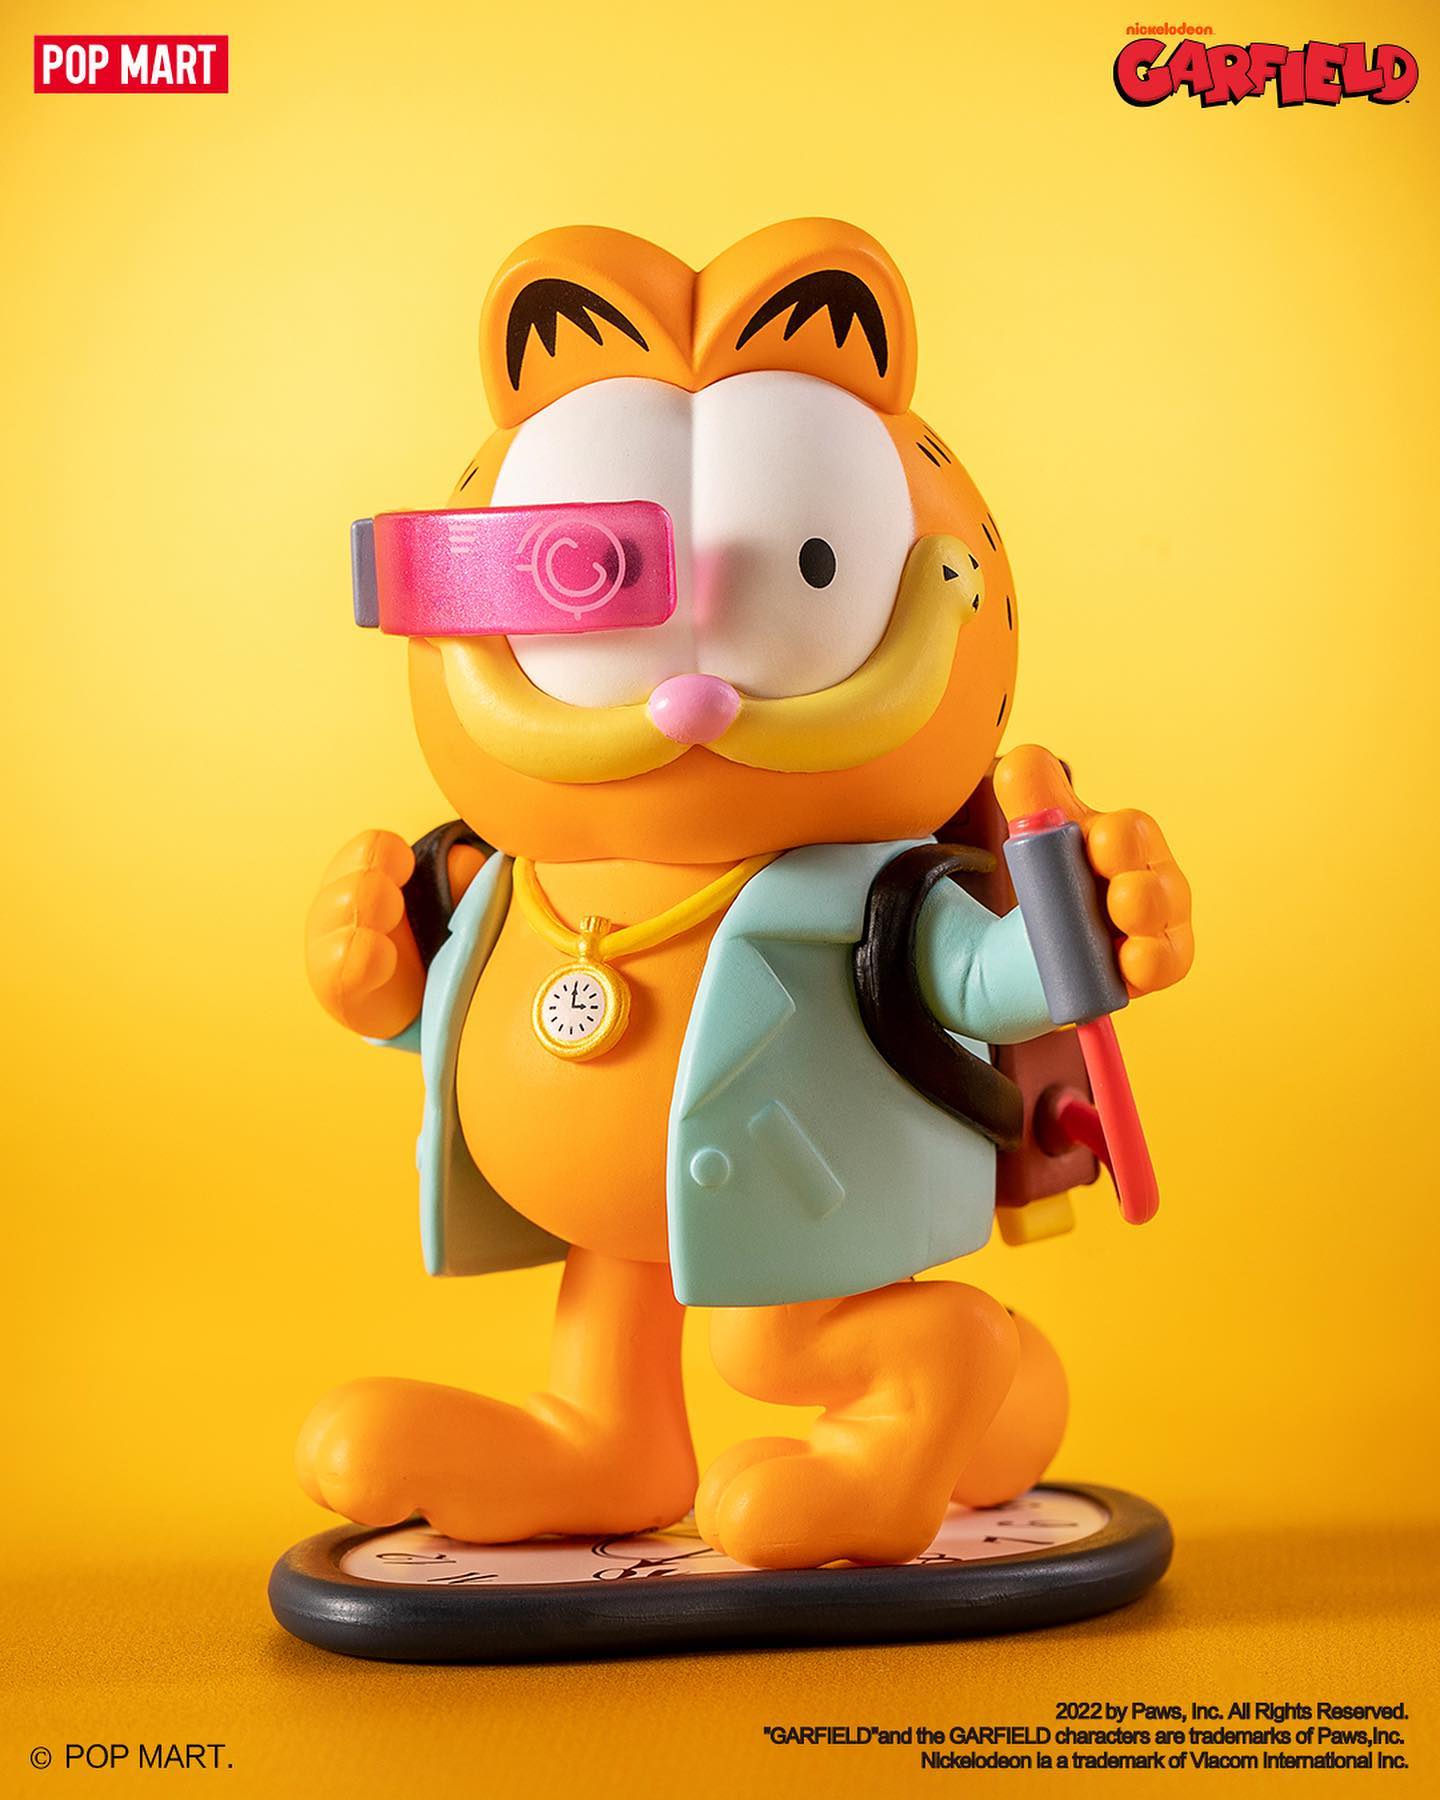 Garfield Future Fantasy Blind Box Series from Pop Mart